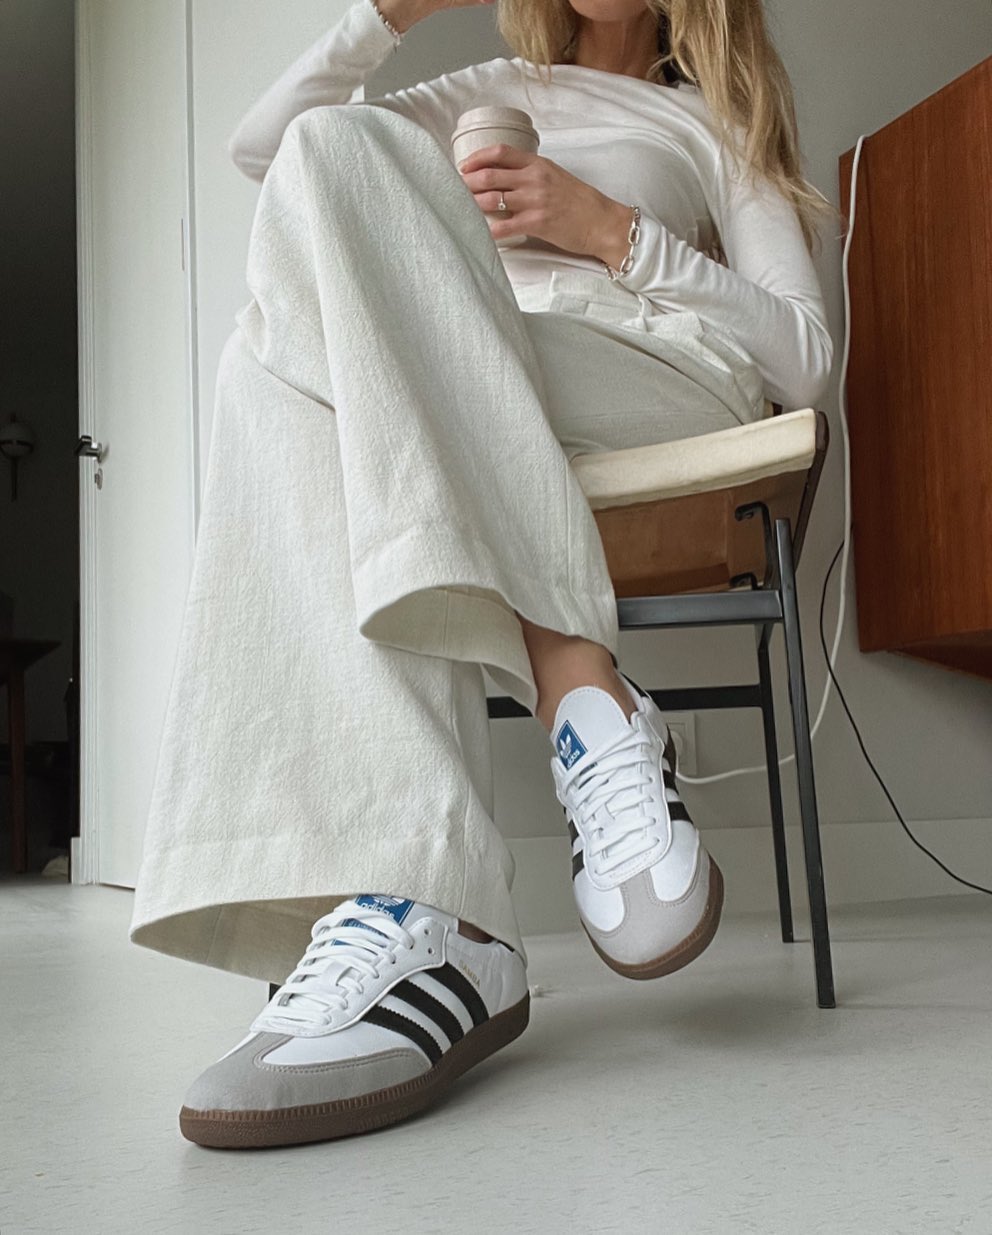 Adidas Samba: @anoukyve wears sambas with white denim and a long sleeve top